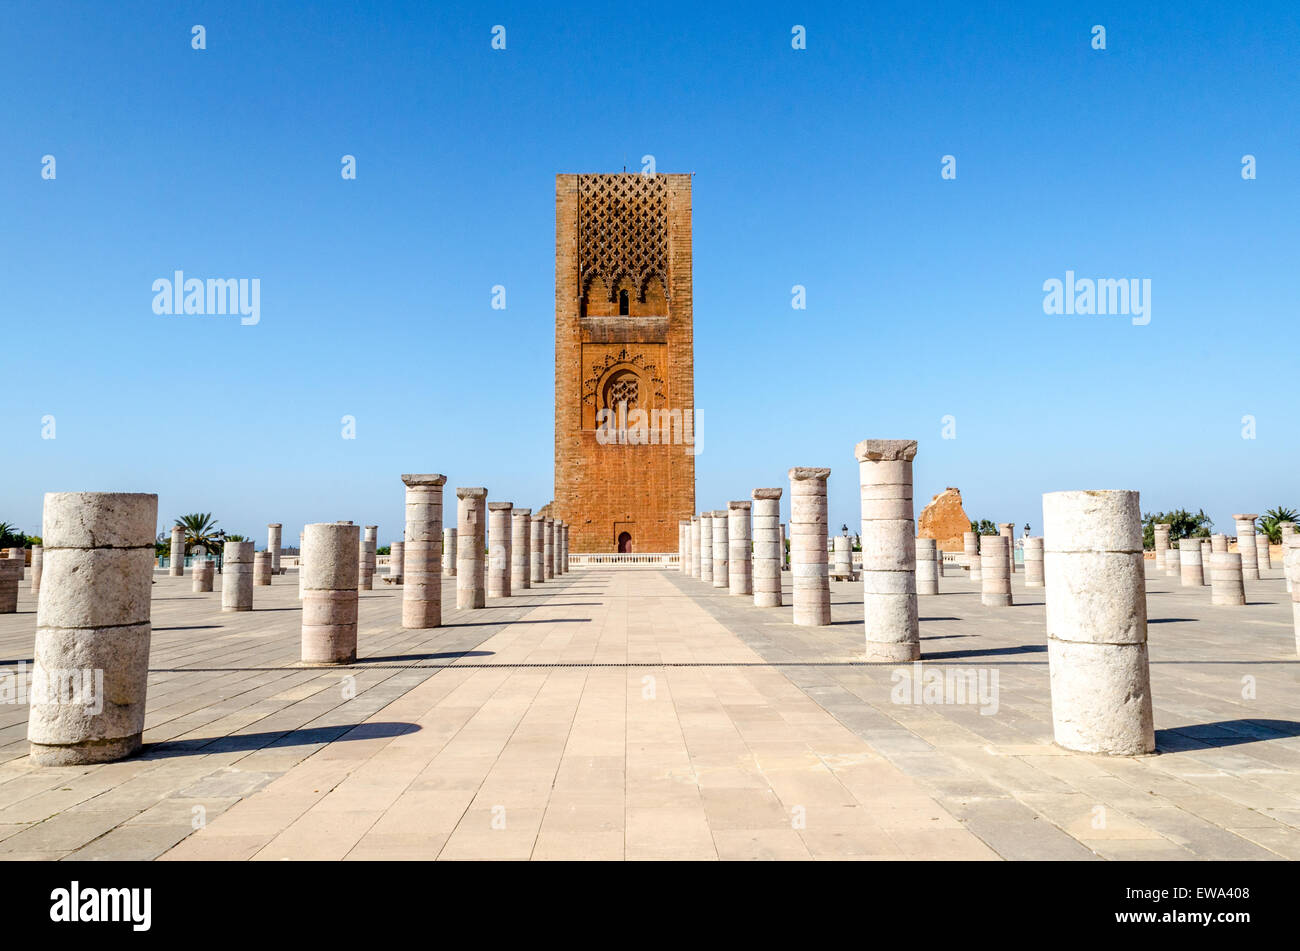 Tour Hassan es el alminar de la antigua mezquita inacabada construida por Moulay Ismail en Rabat, Marruecos. Foto de stock